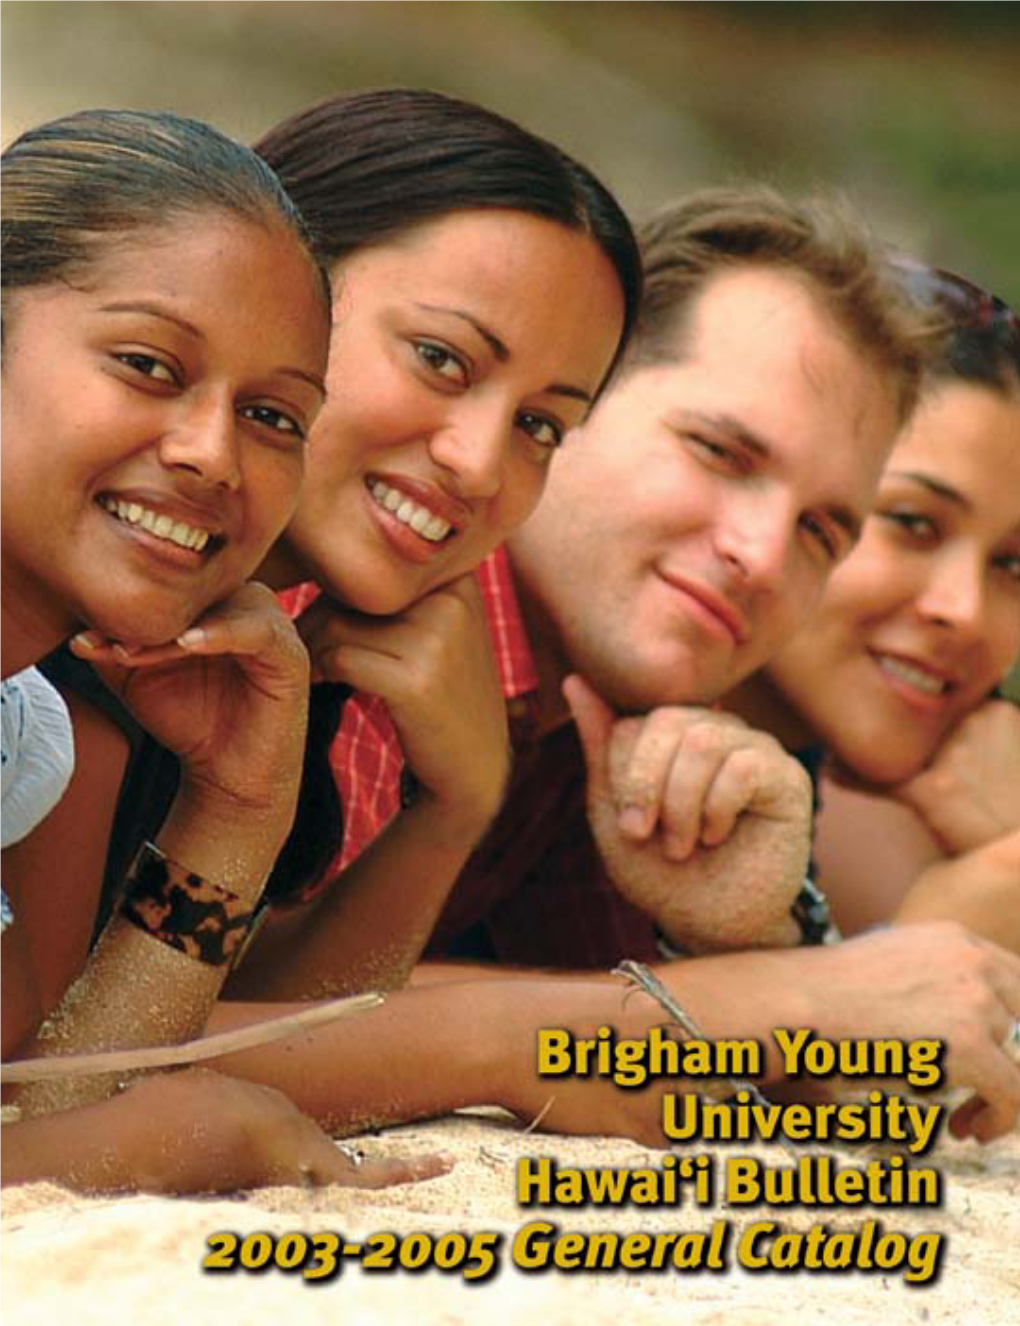 Brigham Young University Hawai'i Bulletin 2003-2005 General Catalog